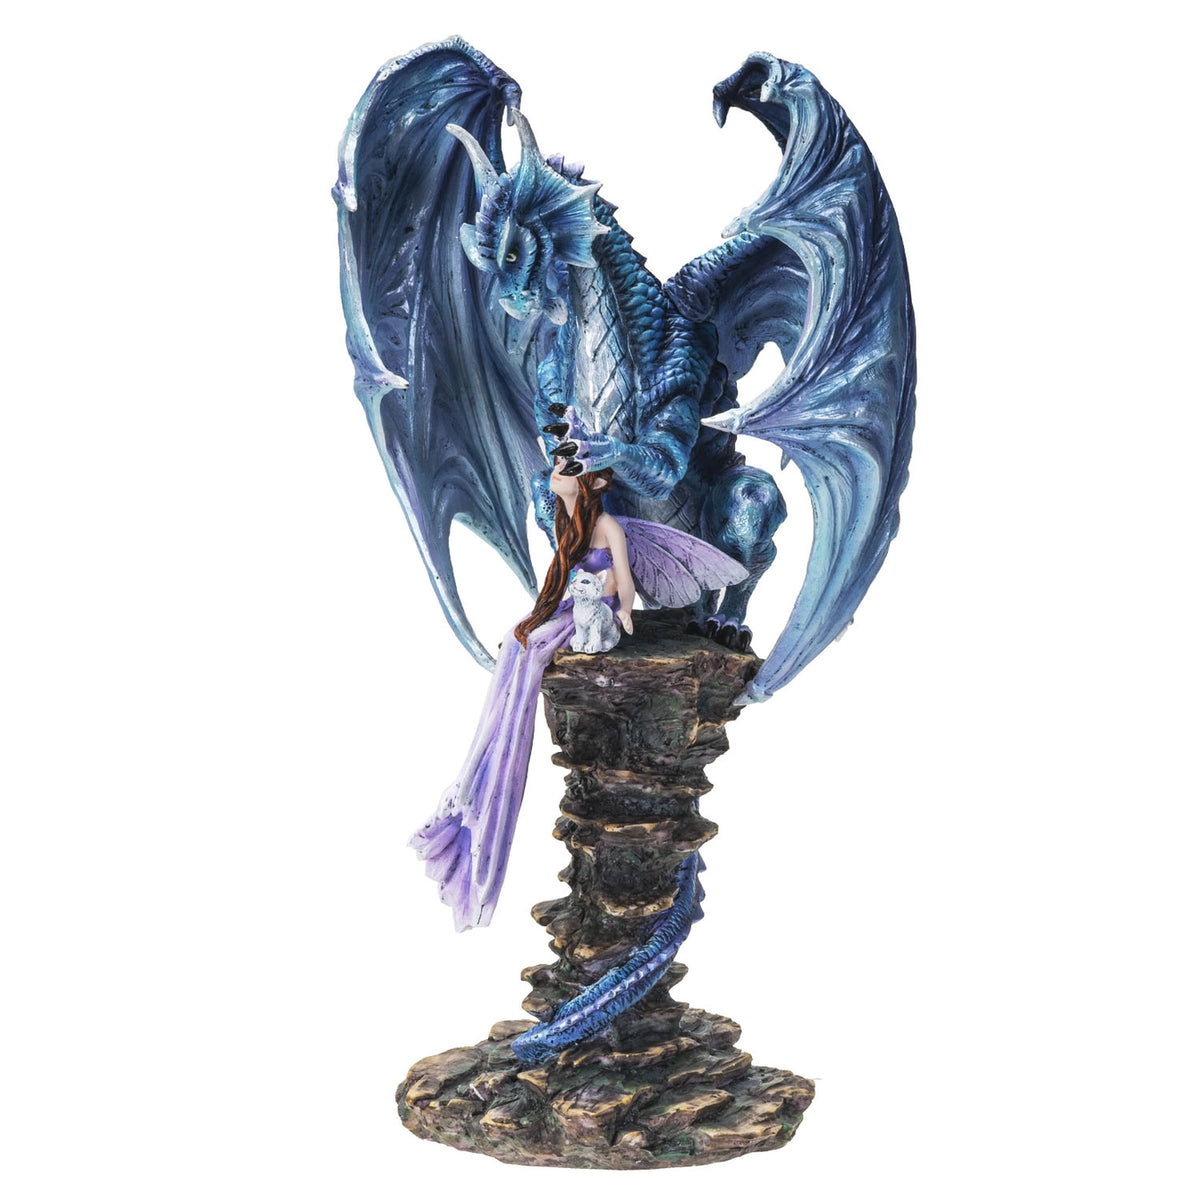 Guardian Dragon, "Protect My Lady" Figurine